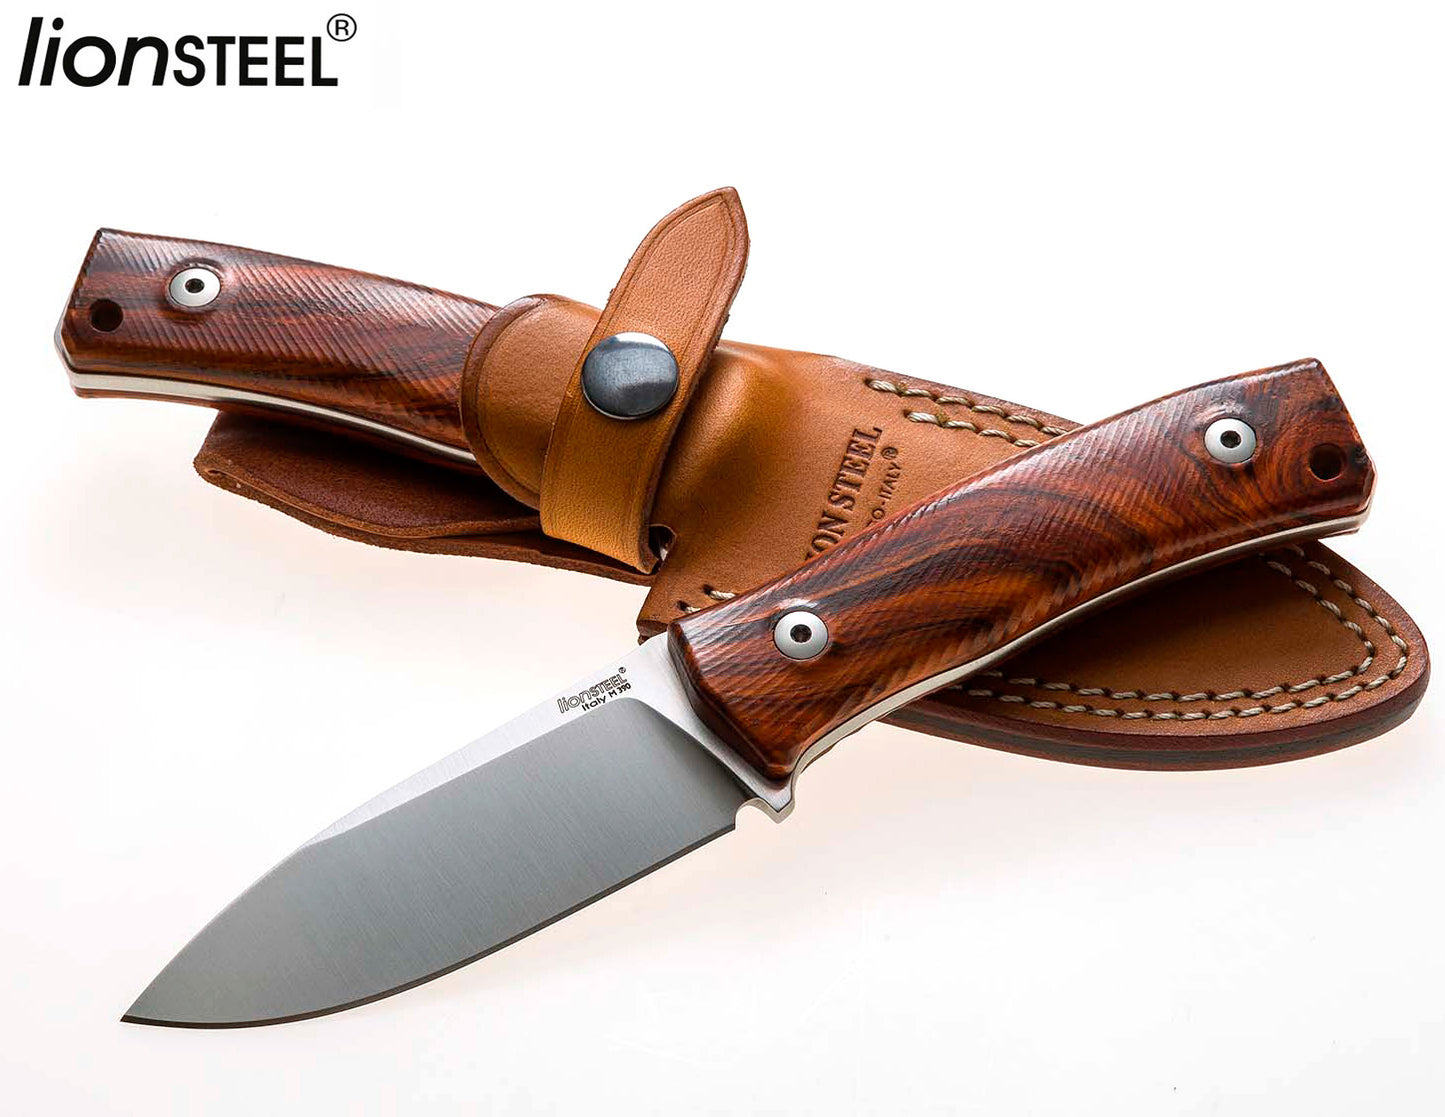 LionSteel M4 3.74" M390 Santos Wood Fixed Blade Bushcraft Knife with Leather Sheath